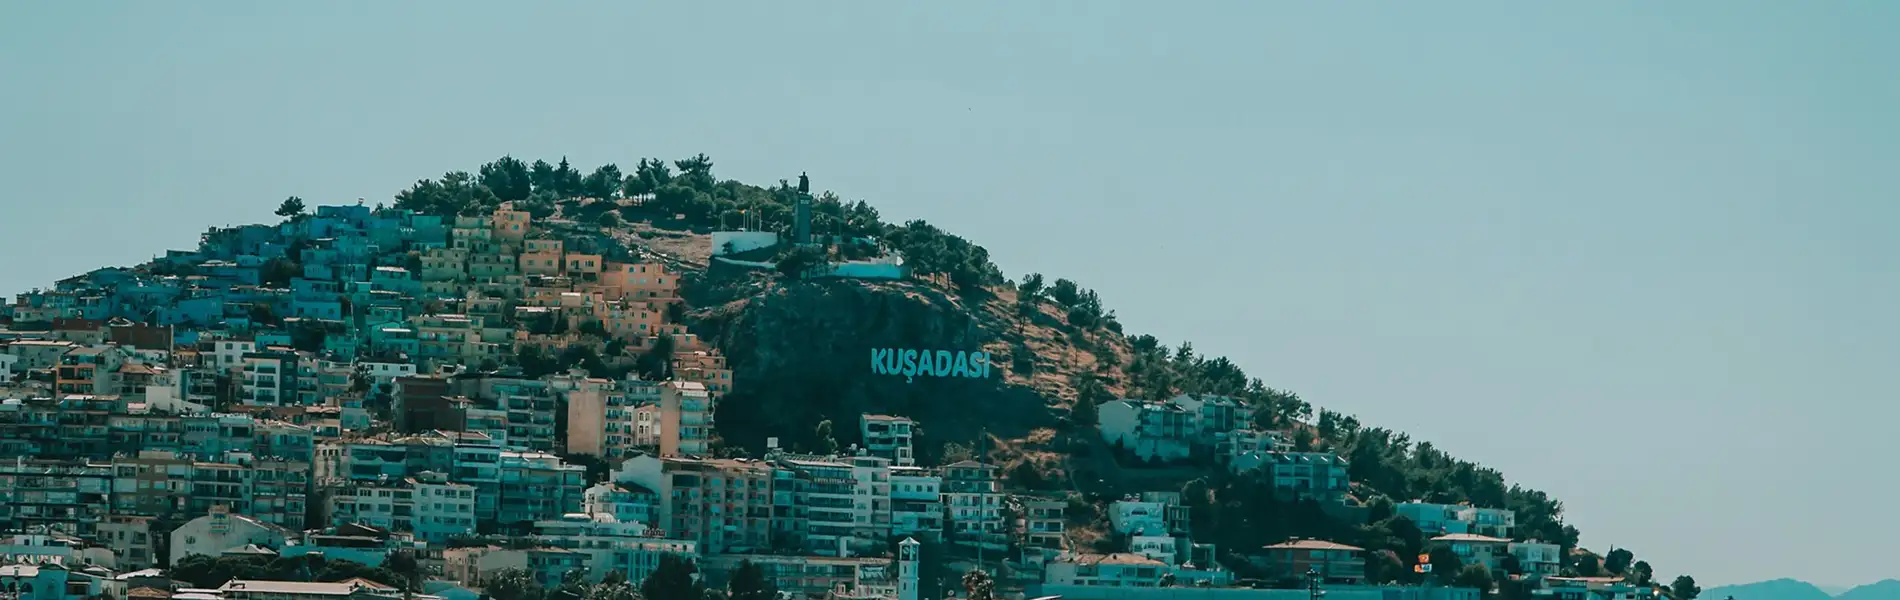 Kusadasi (Turkey)